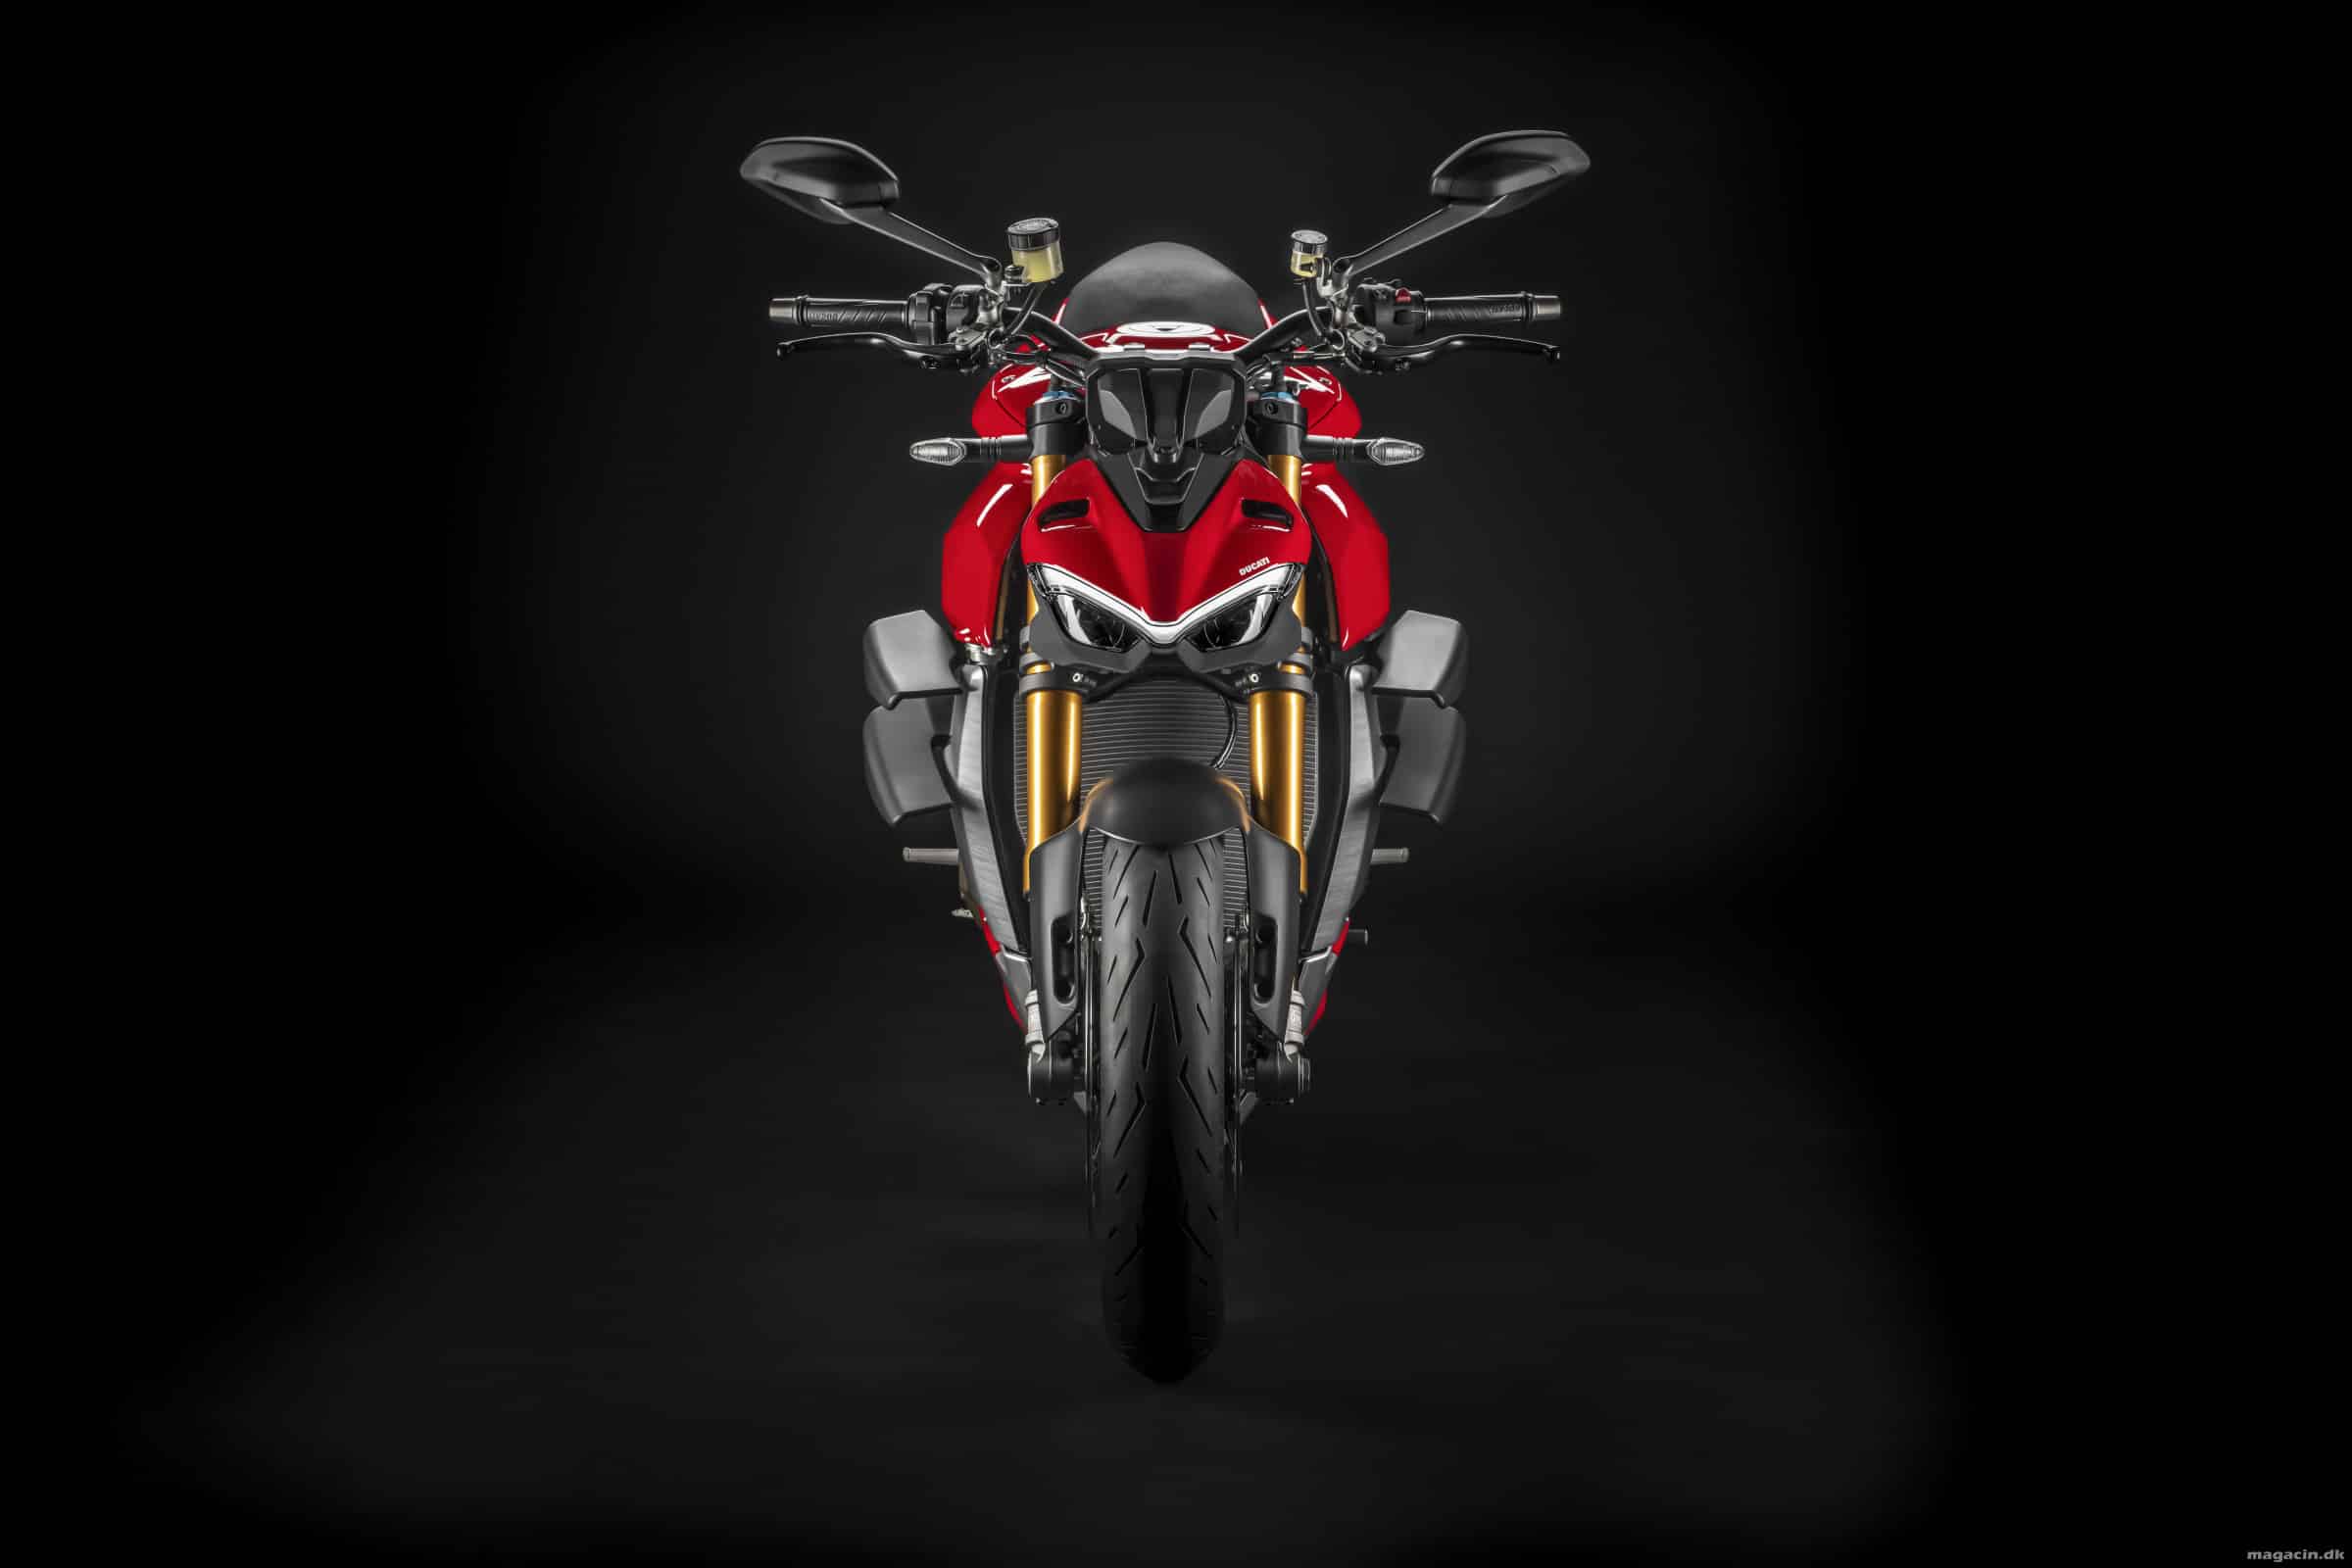 Ducati Streetfighter V4 den smukkeste